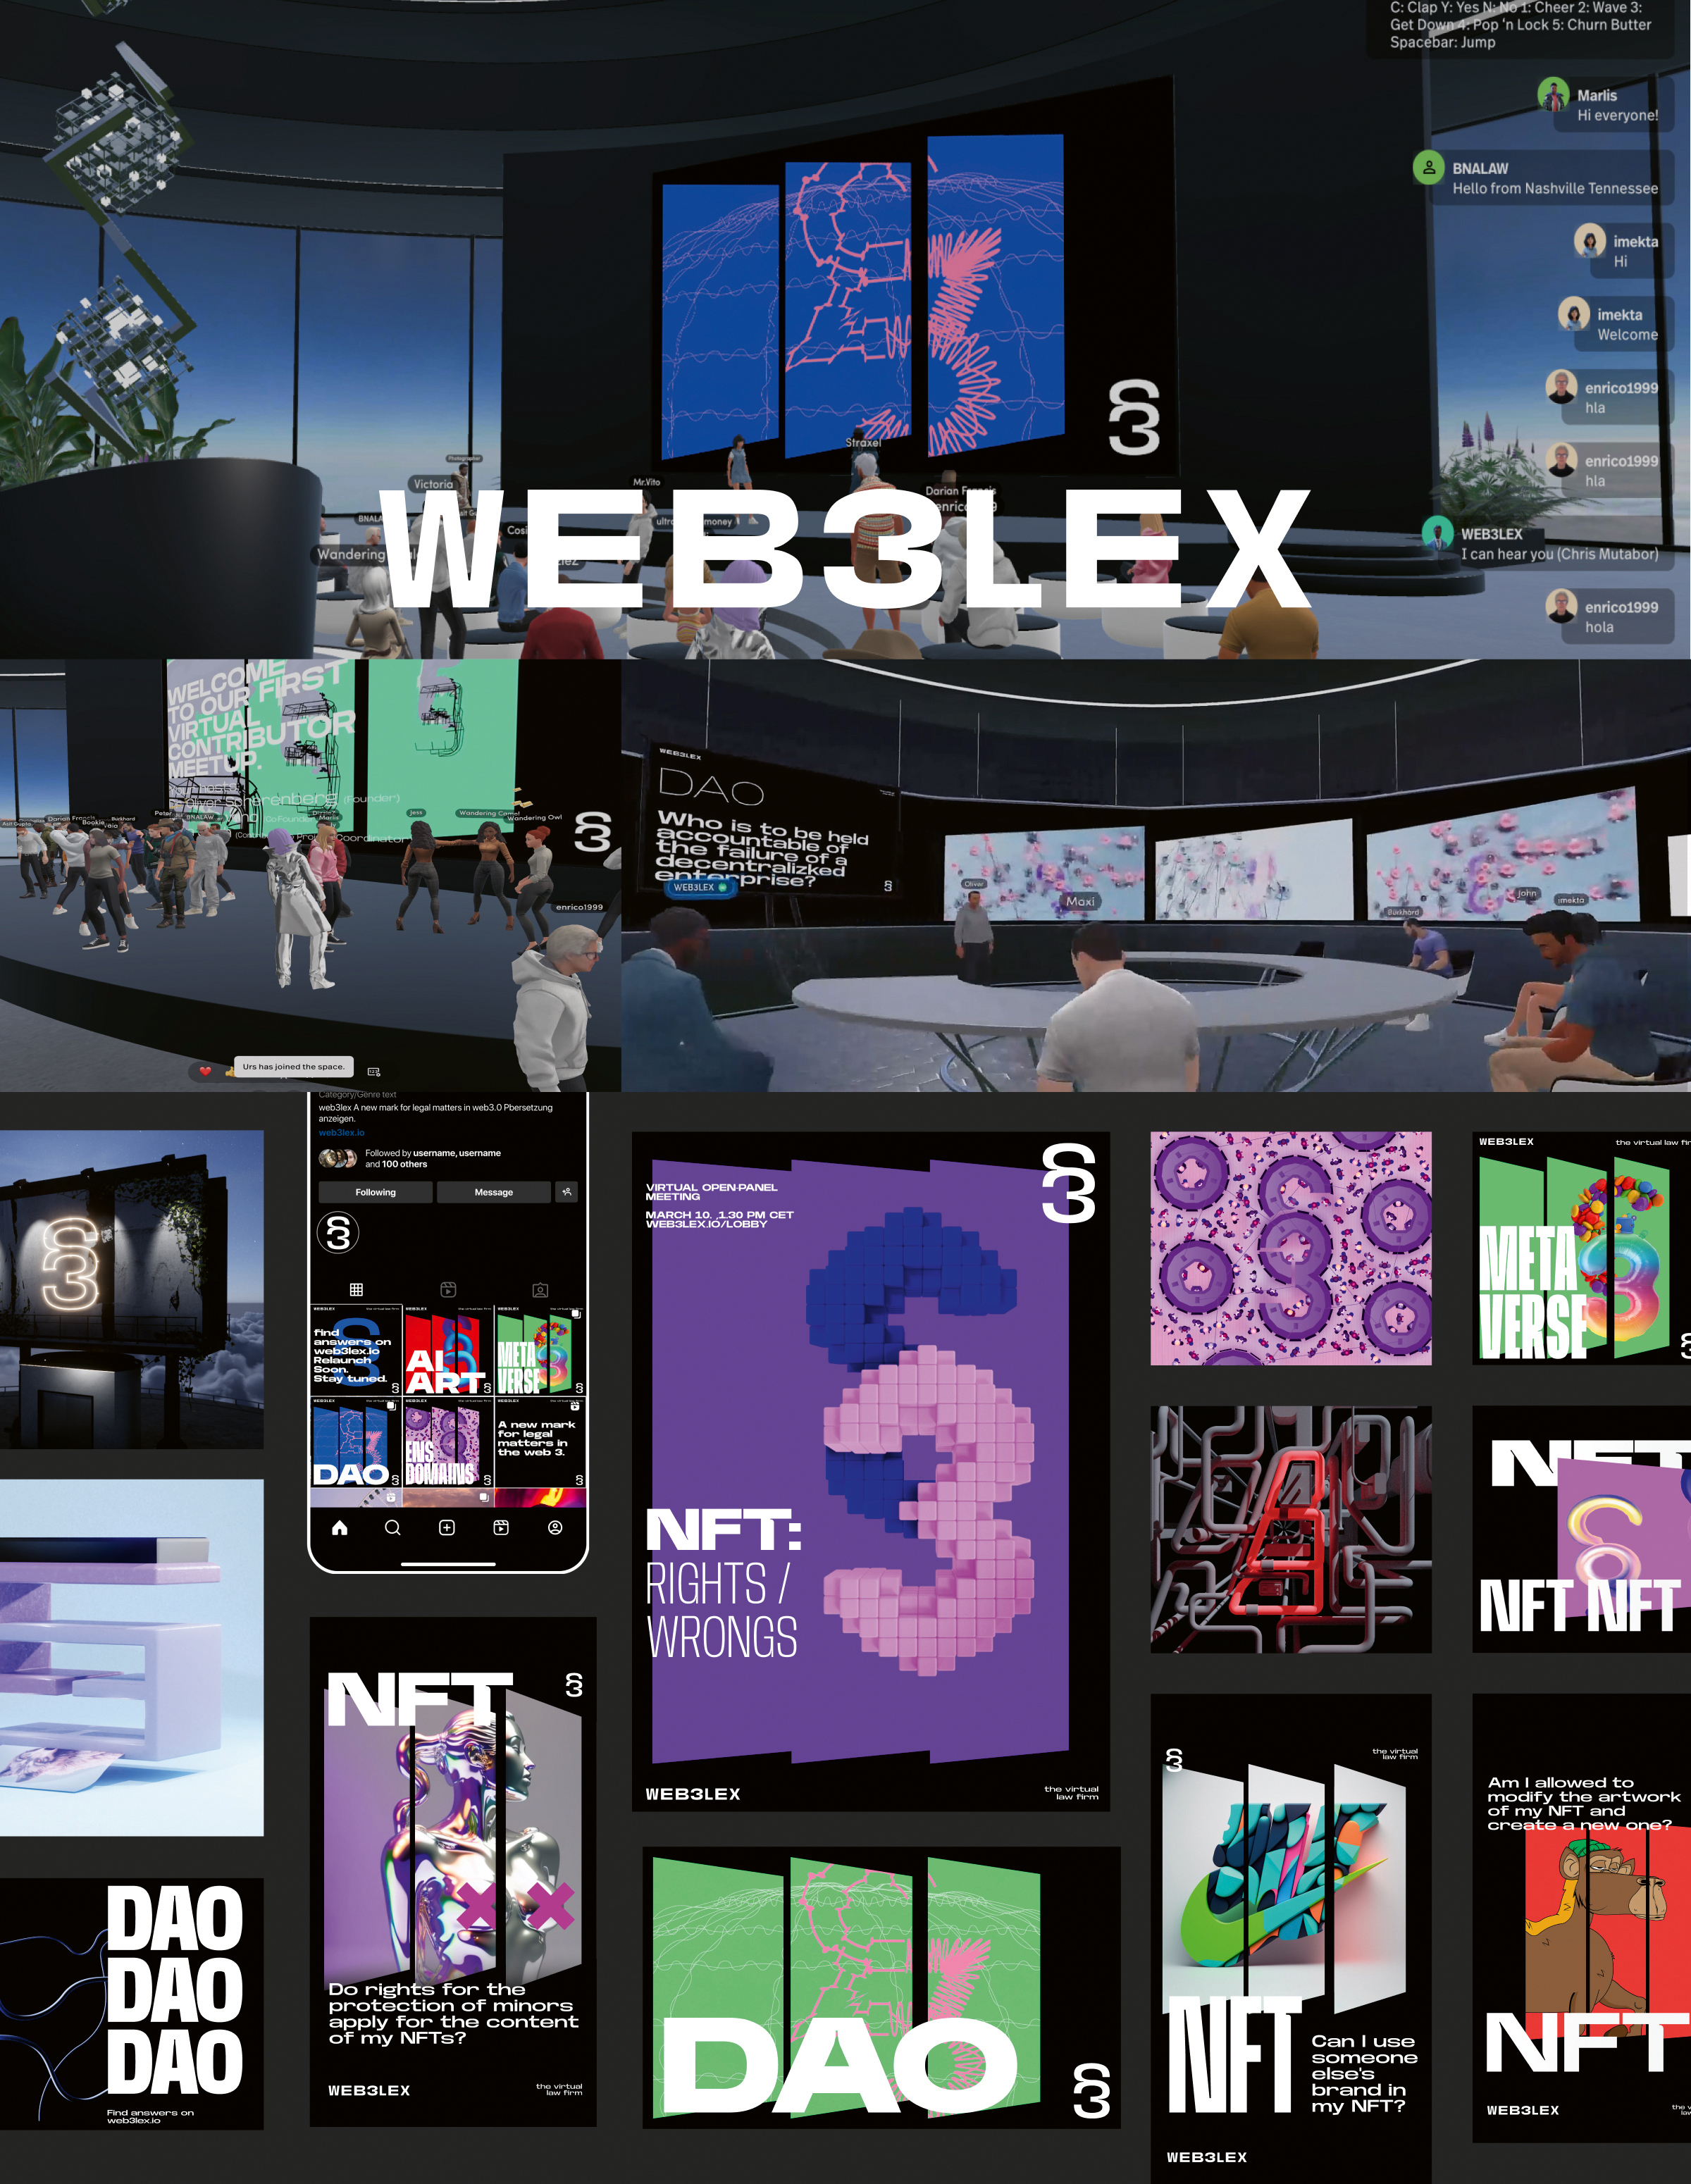 WEB3LEX – The Virtual Law Firm